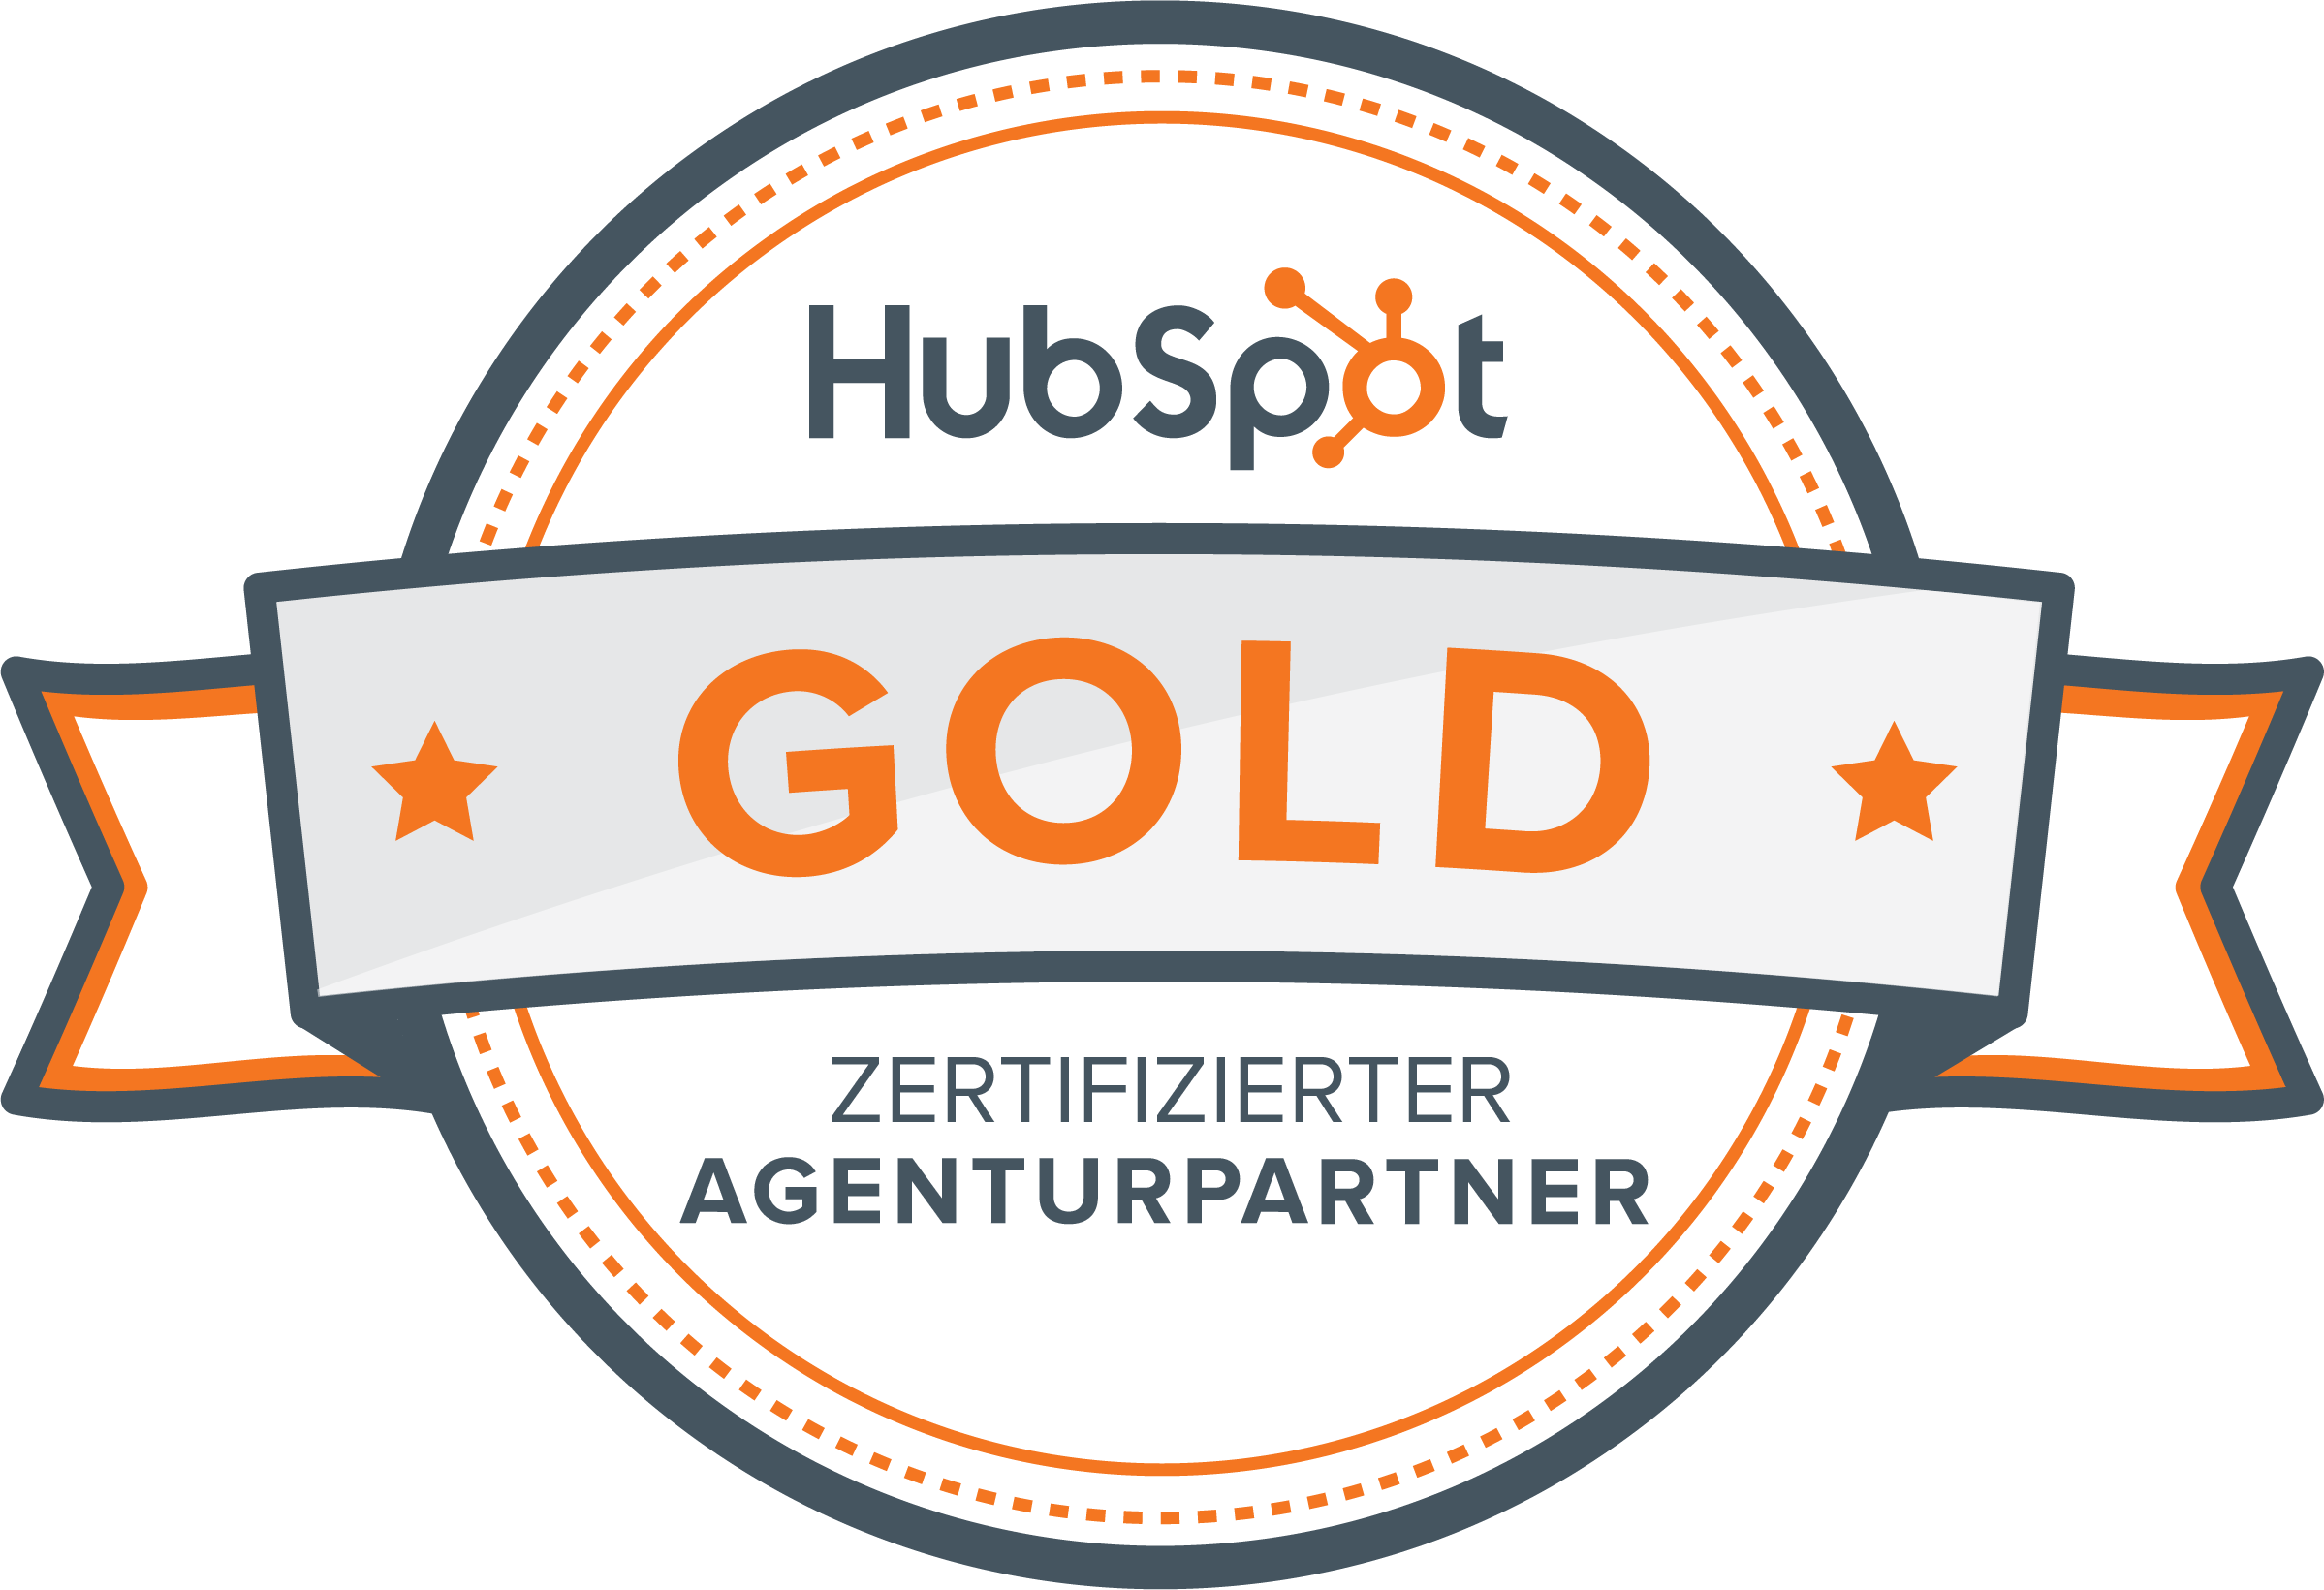 HubSpot Partnerabzeichen Gold